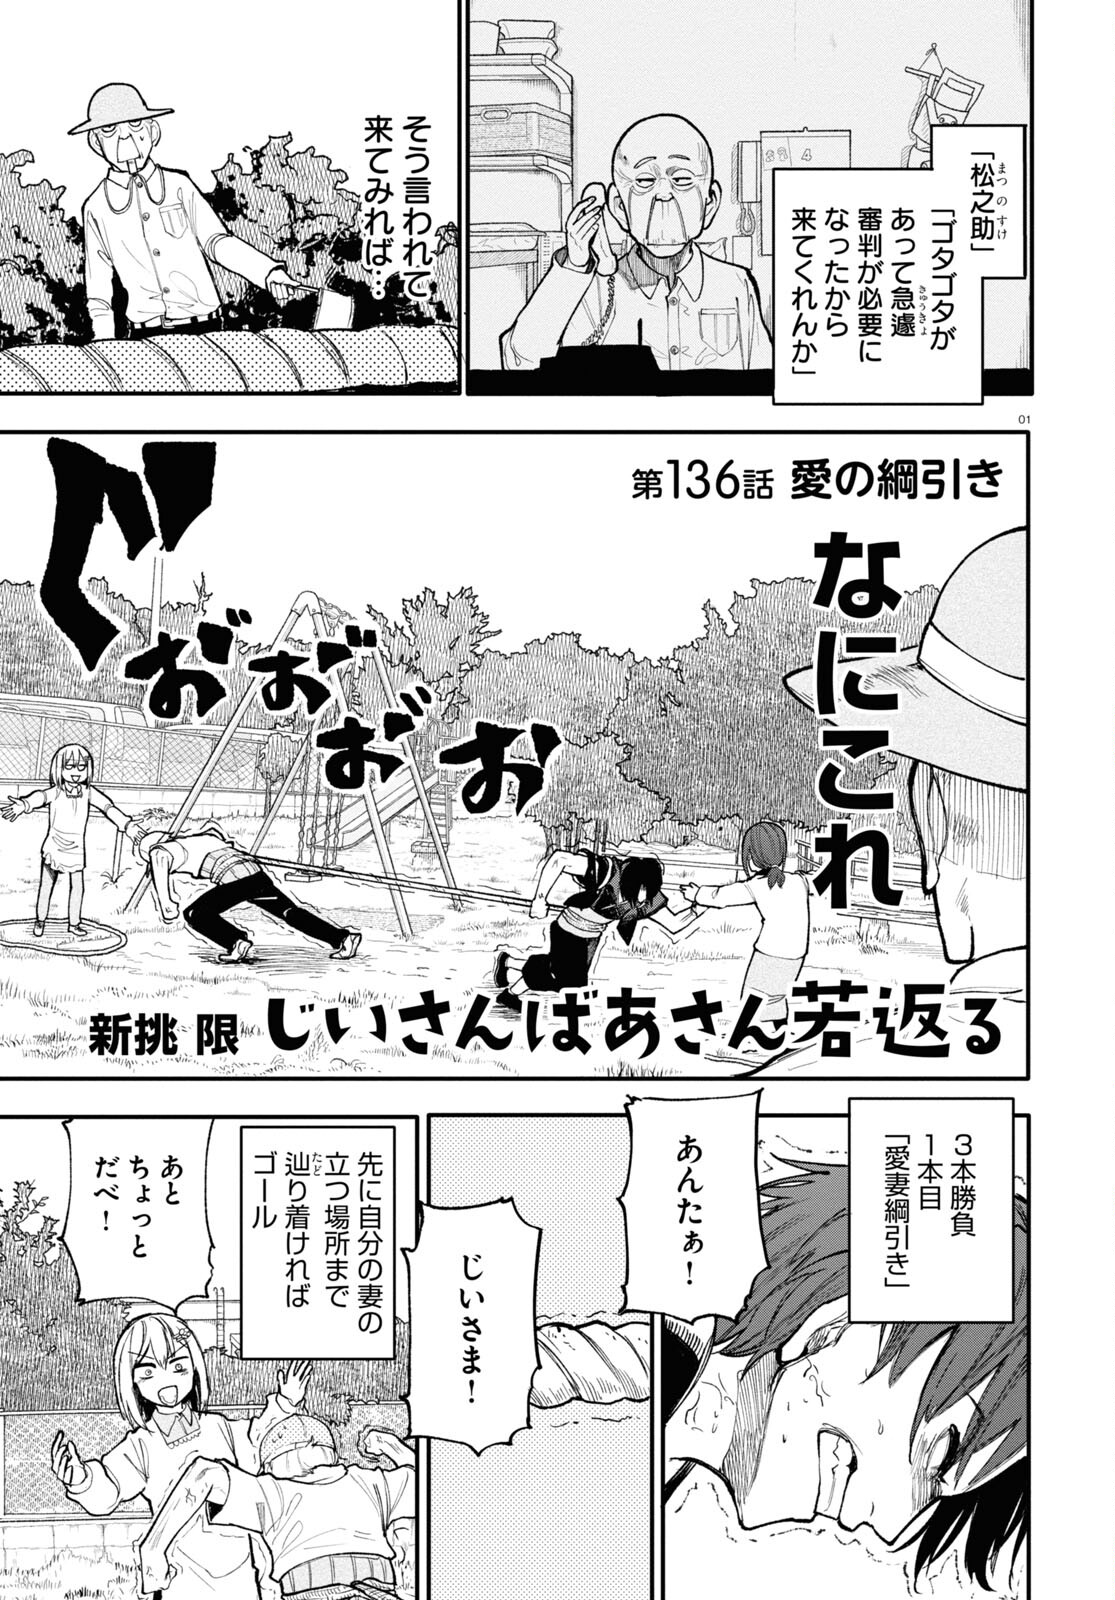 Ojii-san to Obaa-san ga Wakigaetta Hanashi - Chapter 136 - Page 1